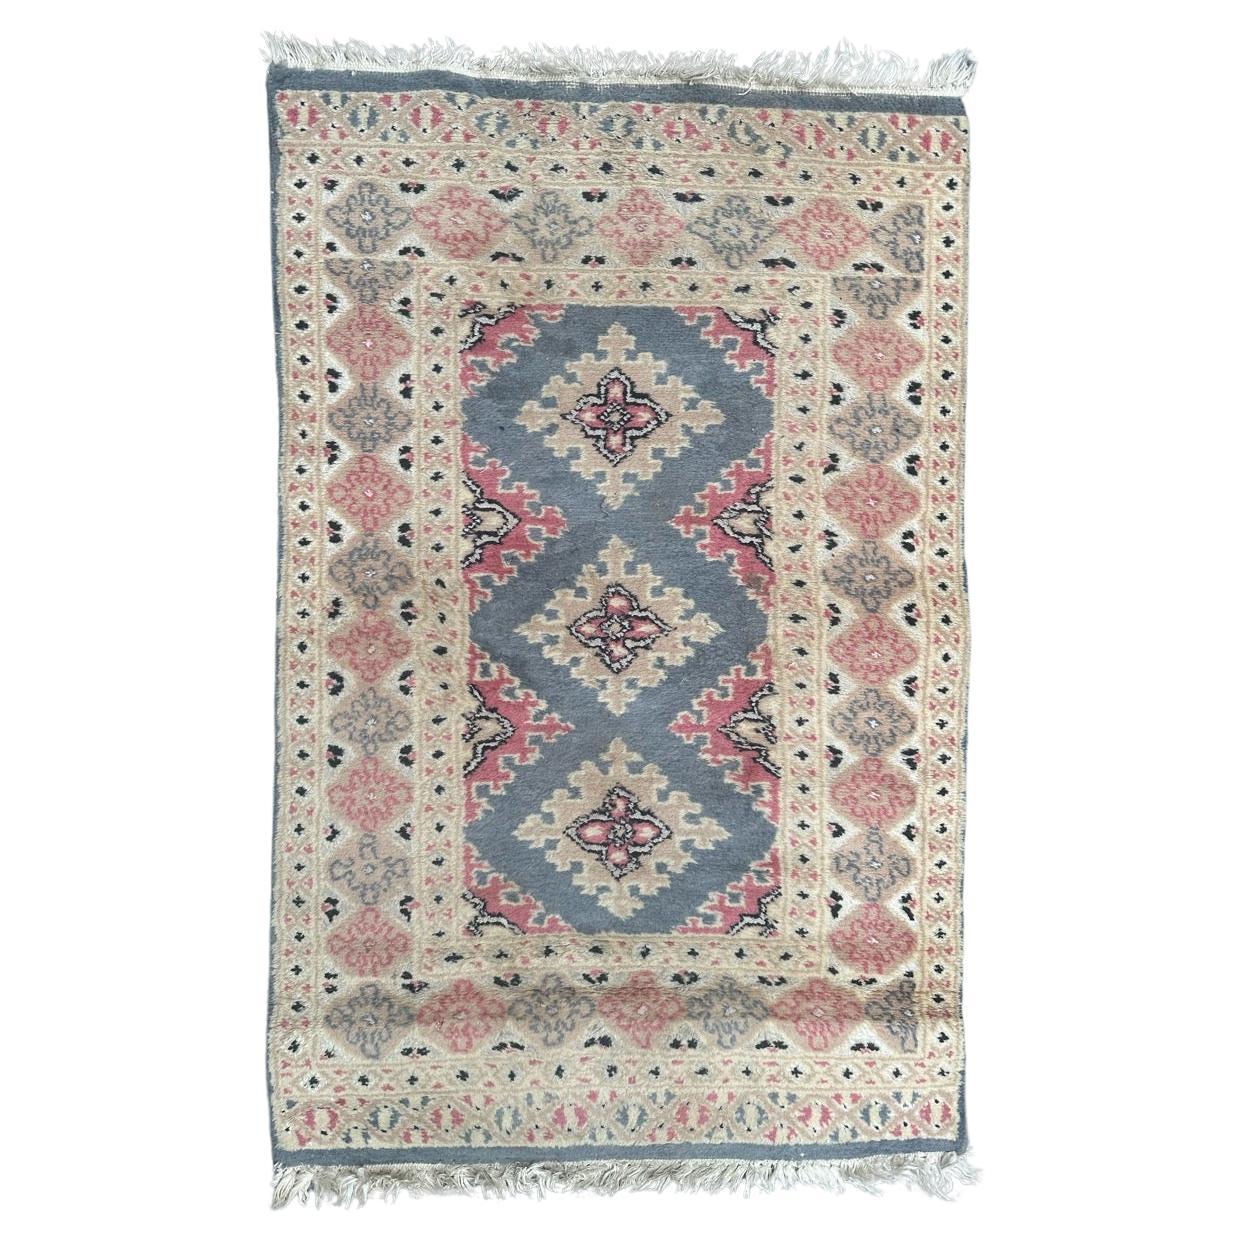  pretty small vintage Pakistani rug